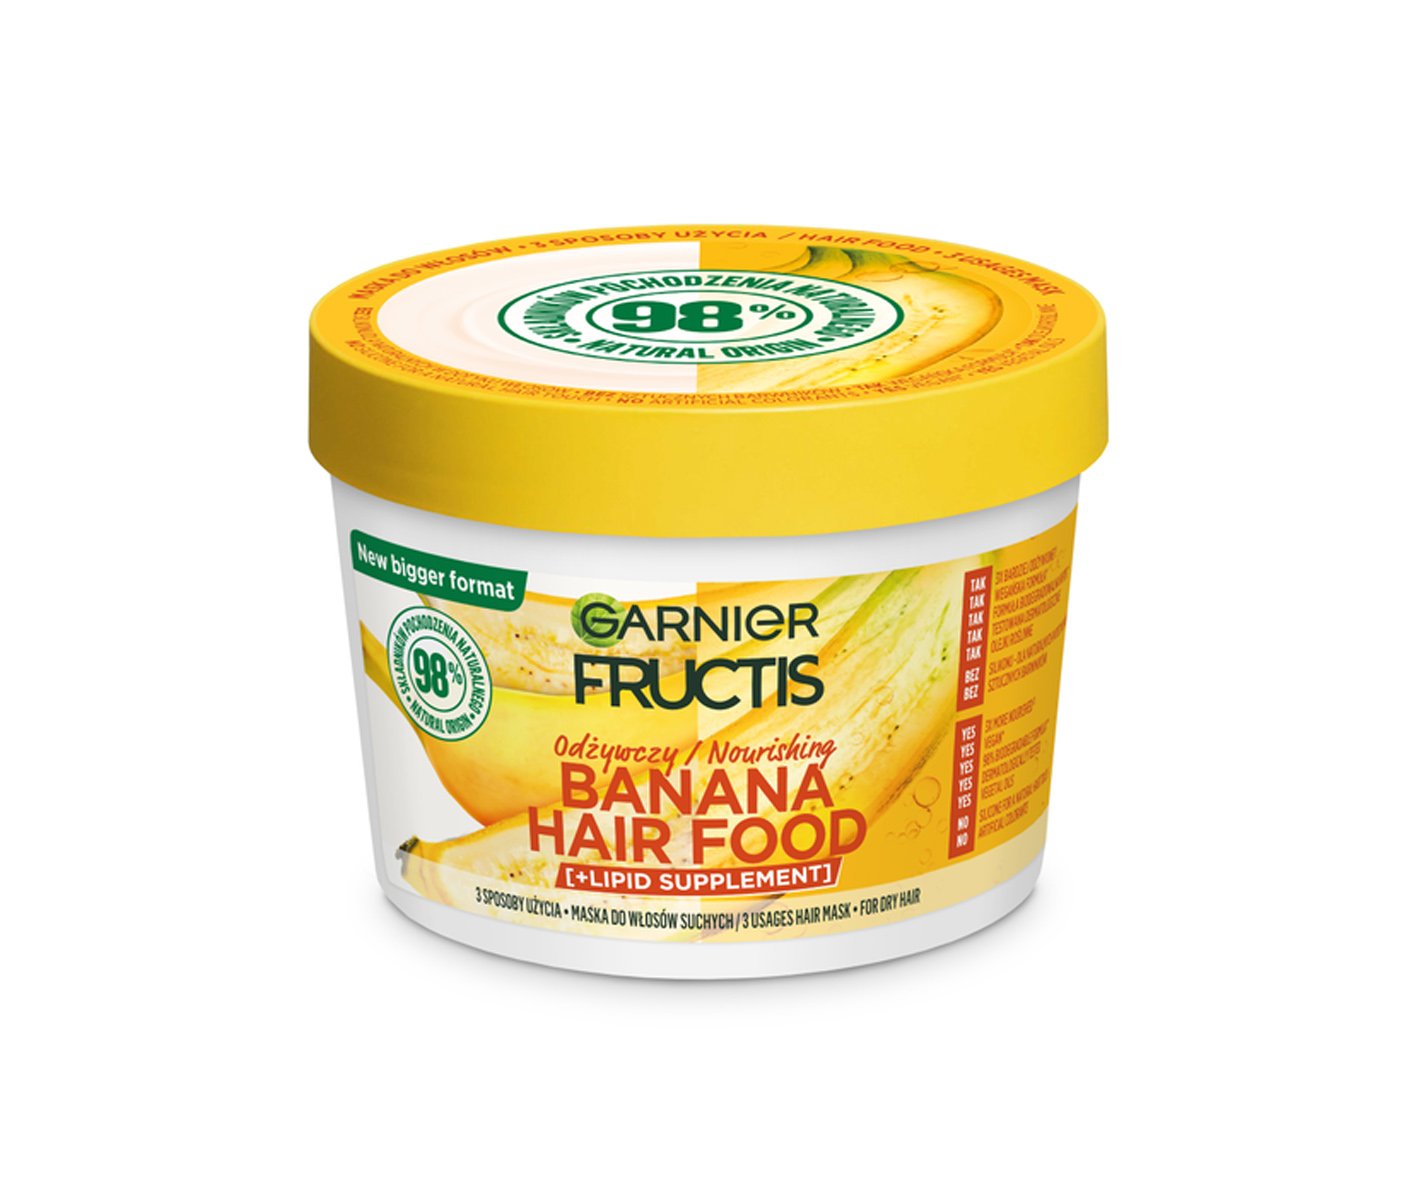 Garnier Fructis, Banana Hair Food, mască de păr